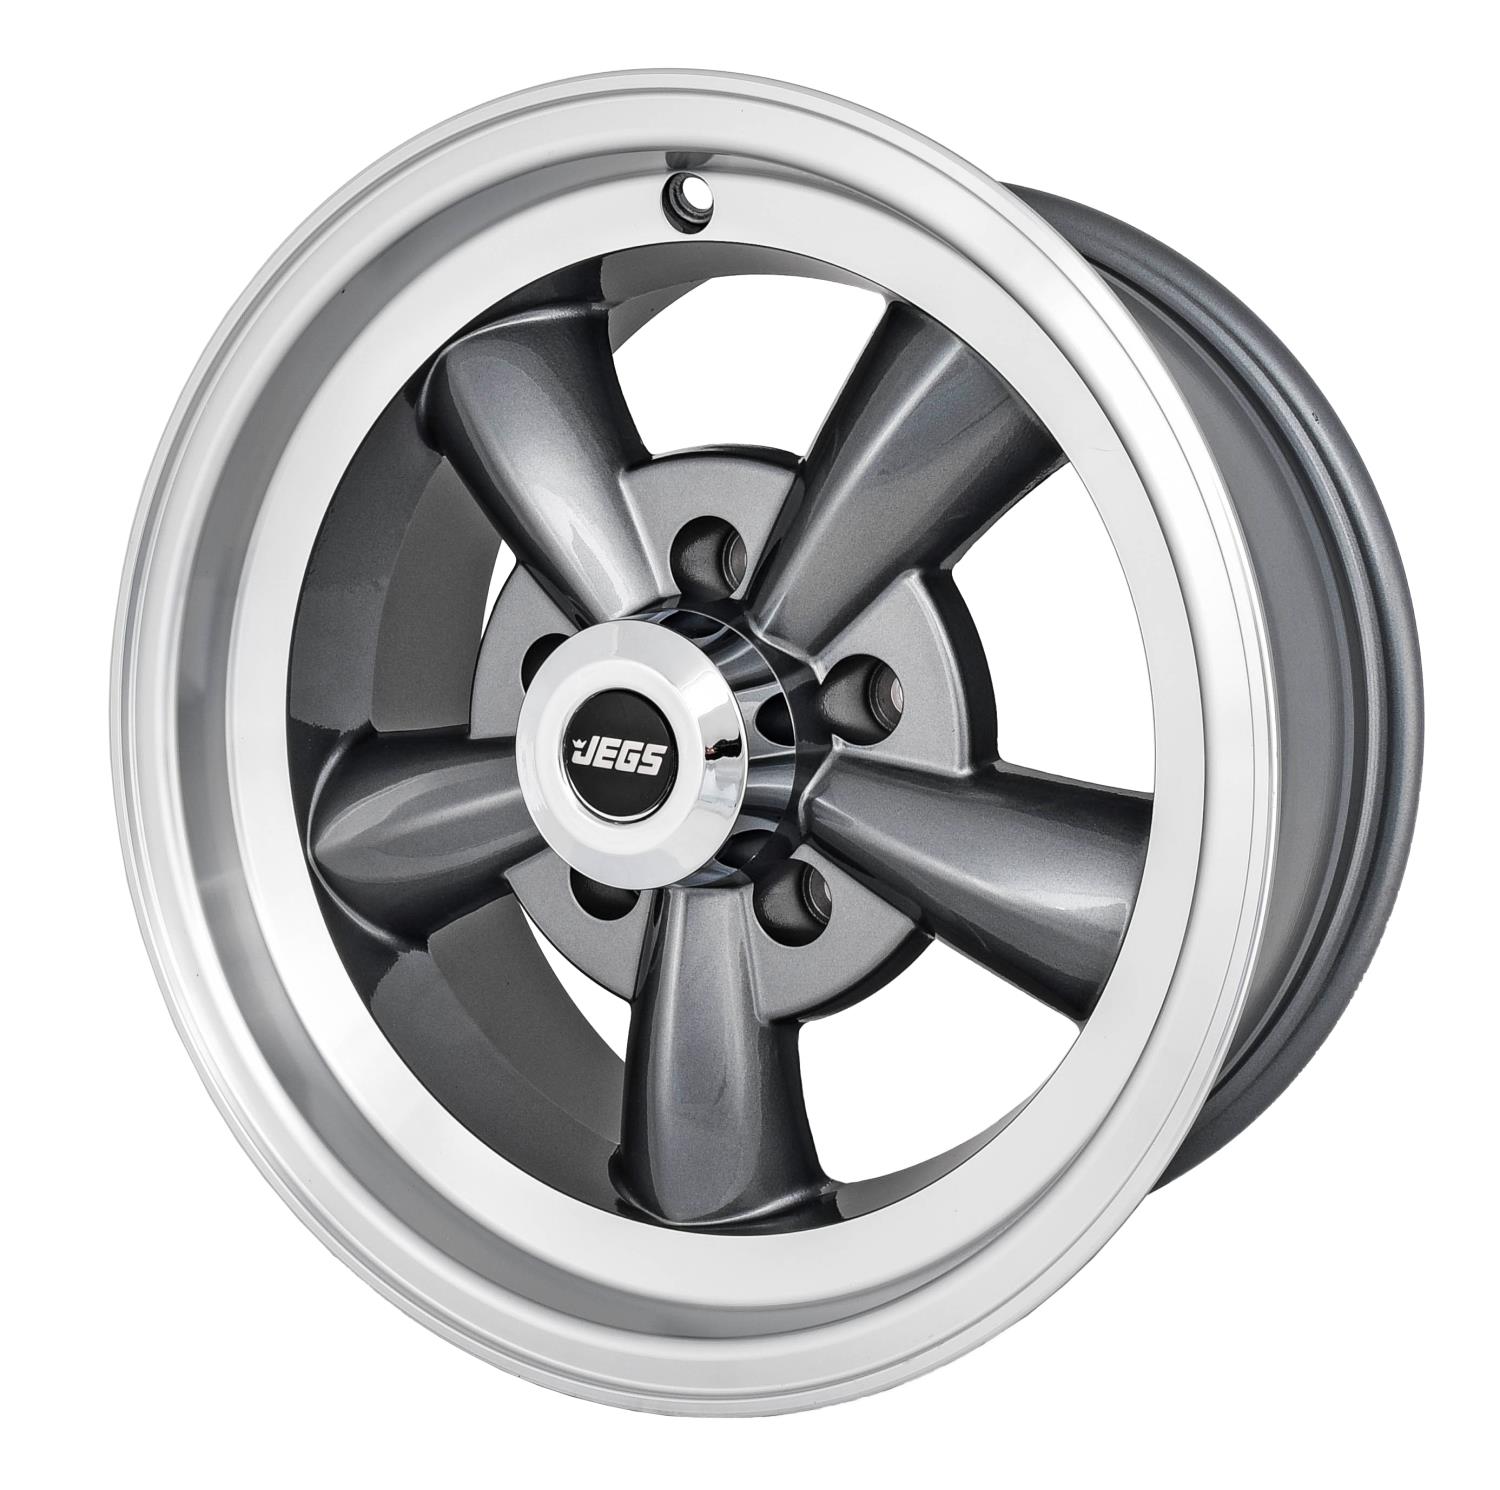 Sport Torque Wheel [Size: 15" x 7"]